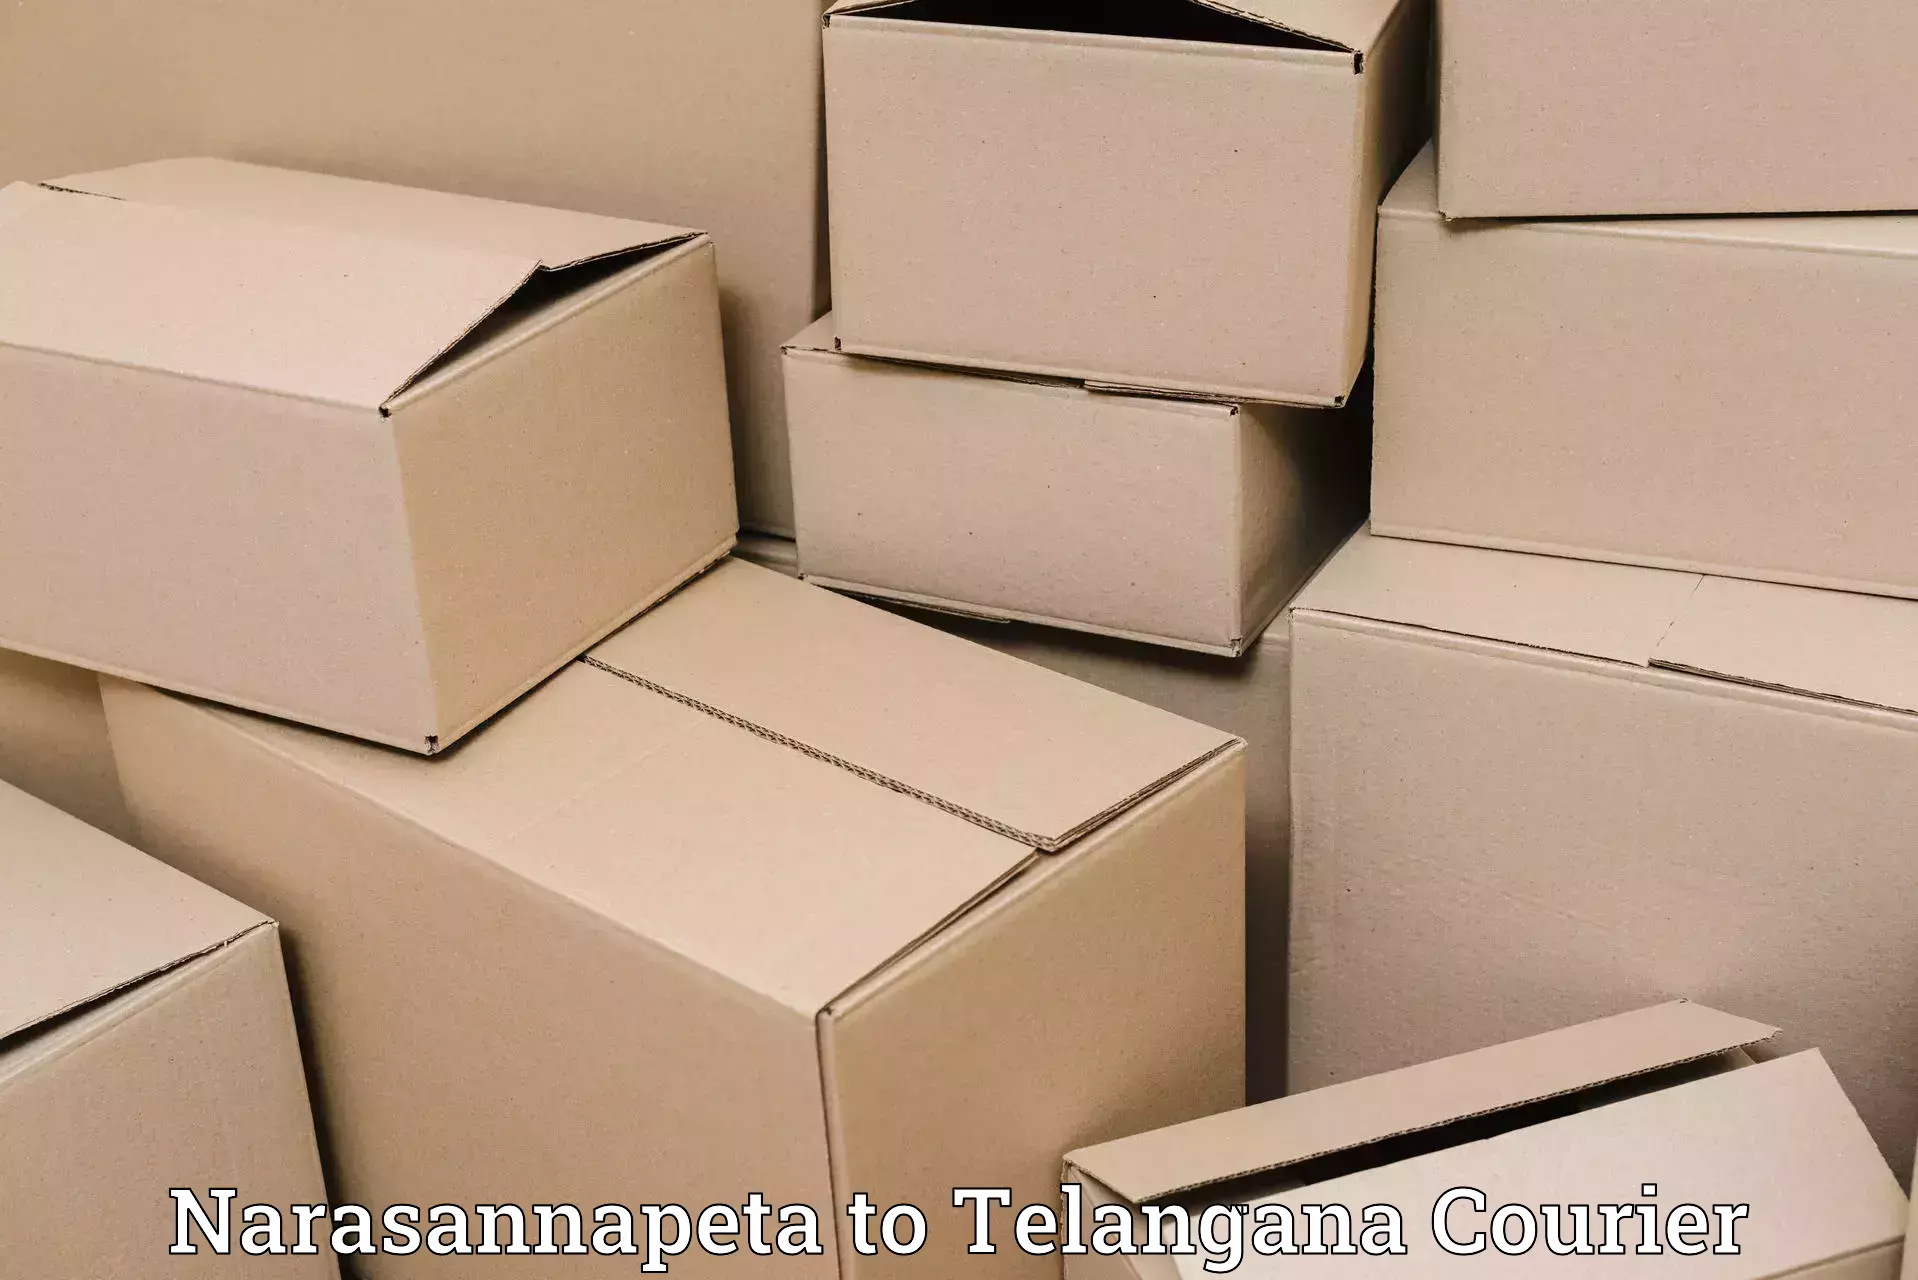 Efficient cargo handling Narasannapeta to Telangana